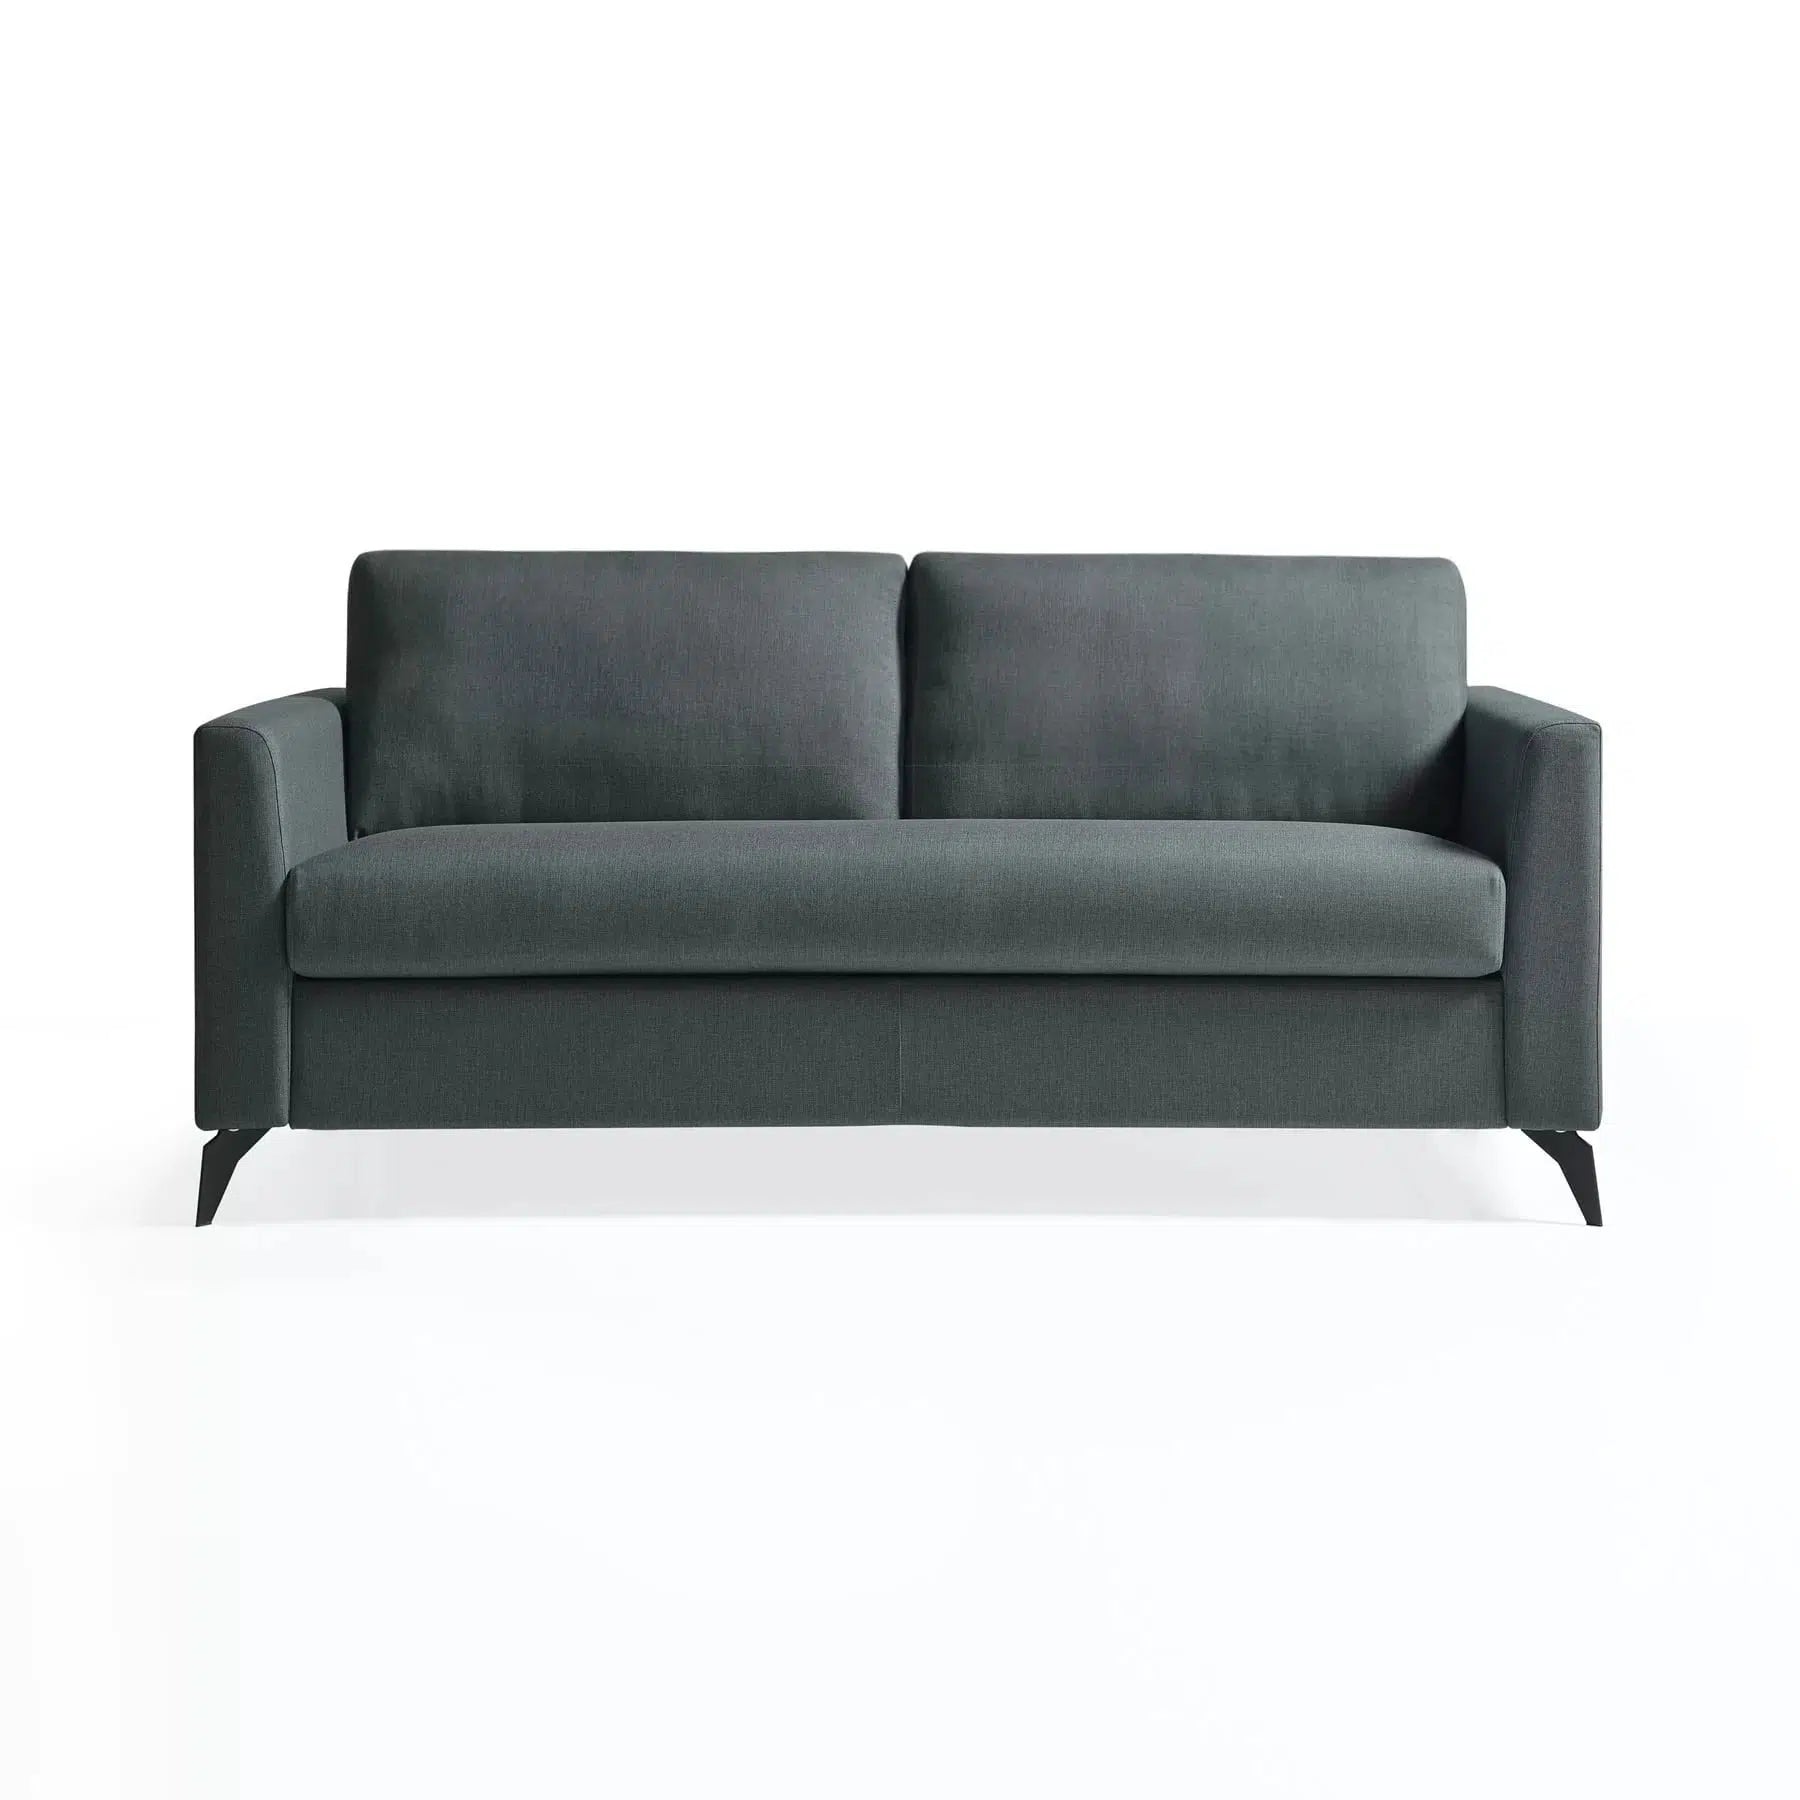 Jorne 853 Sofa Bed-TM Leader-Contract Furniture Store